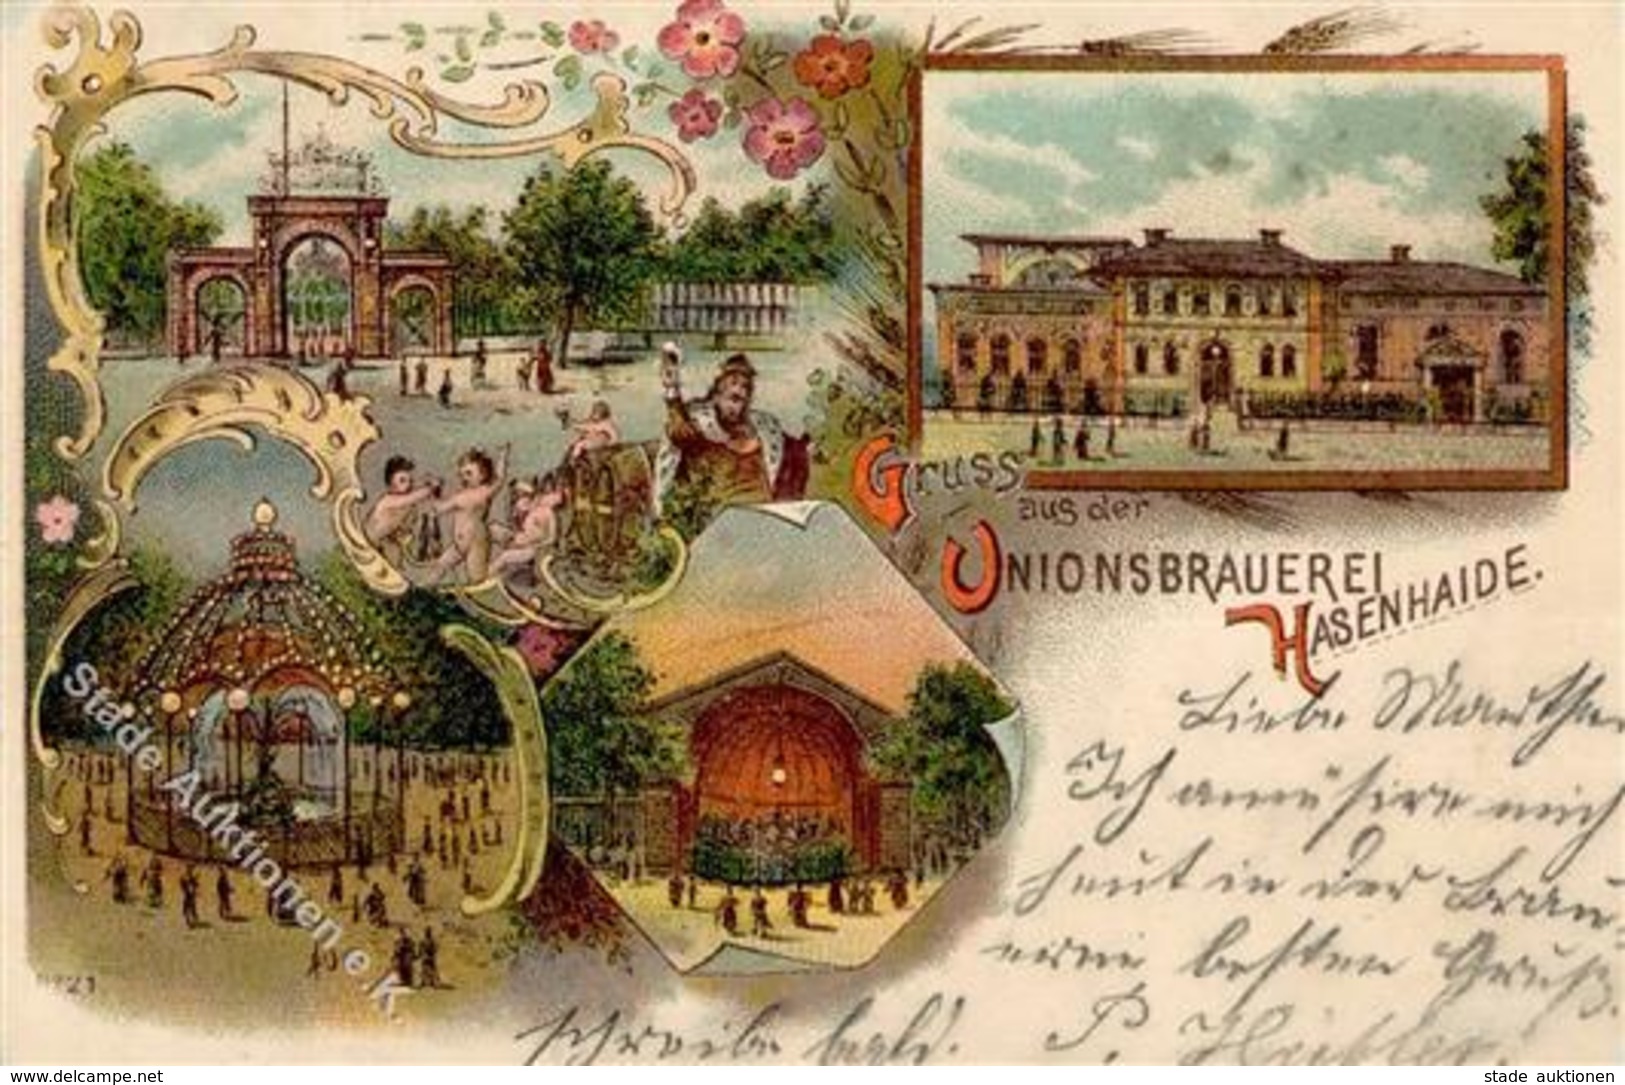 Rixdorf (1000) Brauerei Hasenhaide Lithographie 1901 I-II - Cameroun